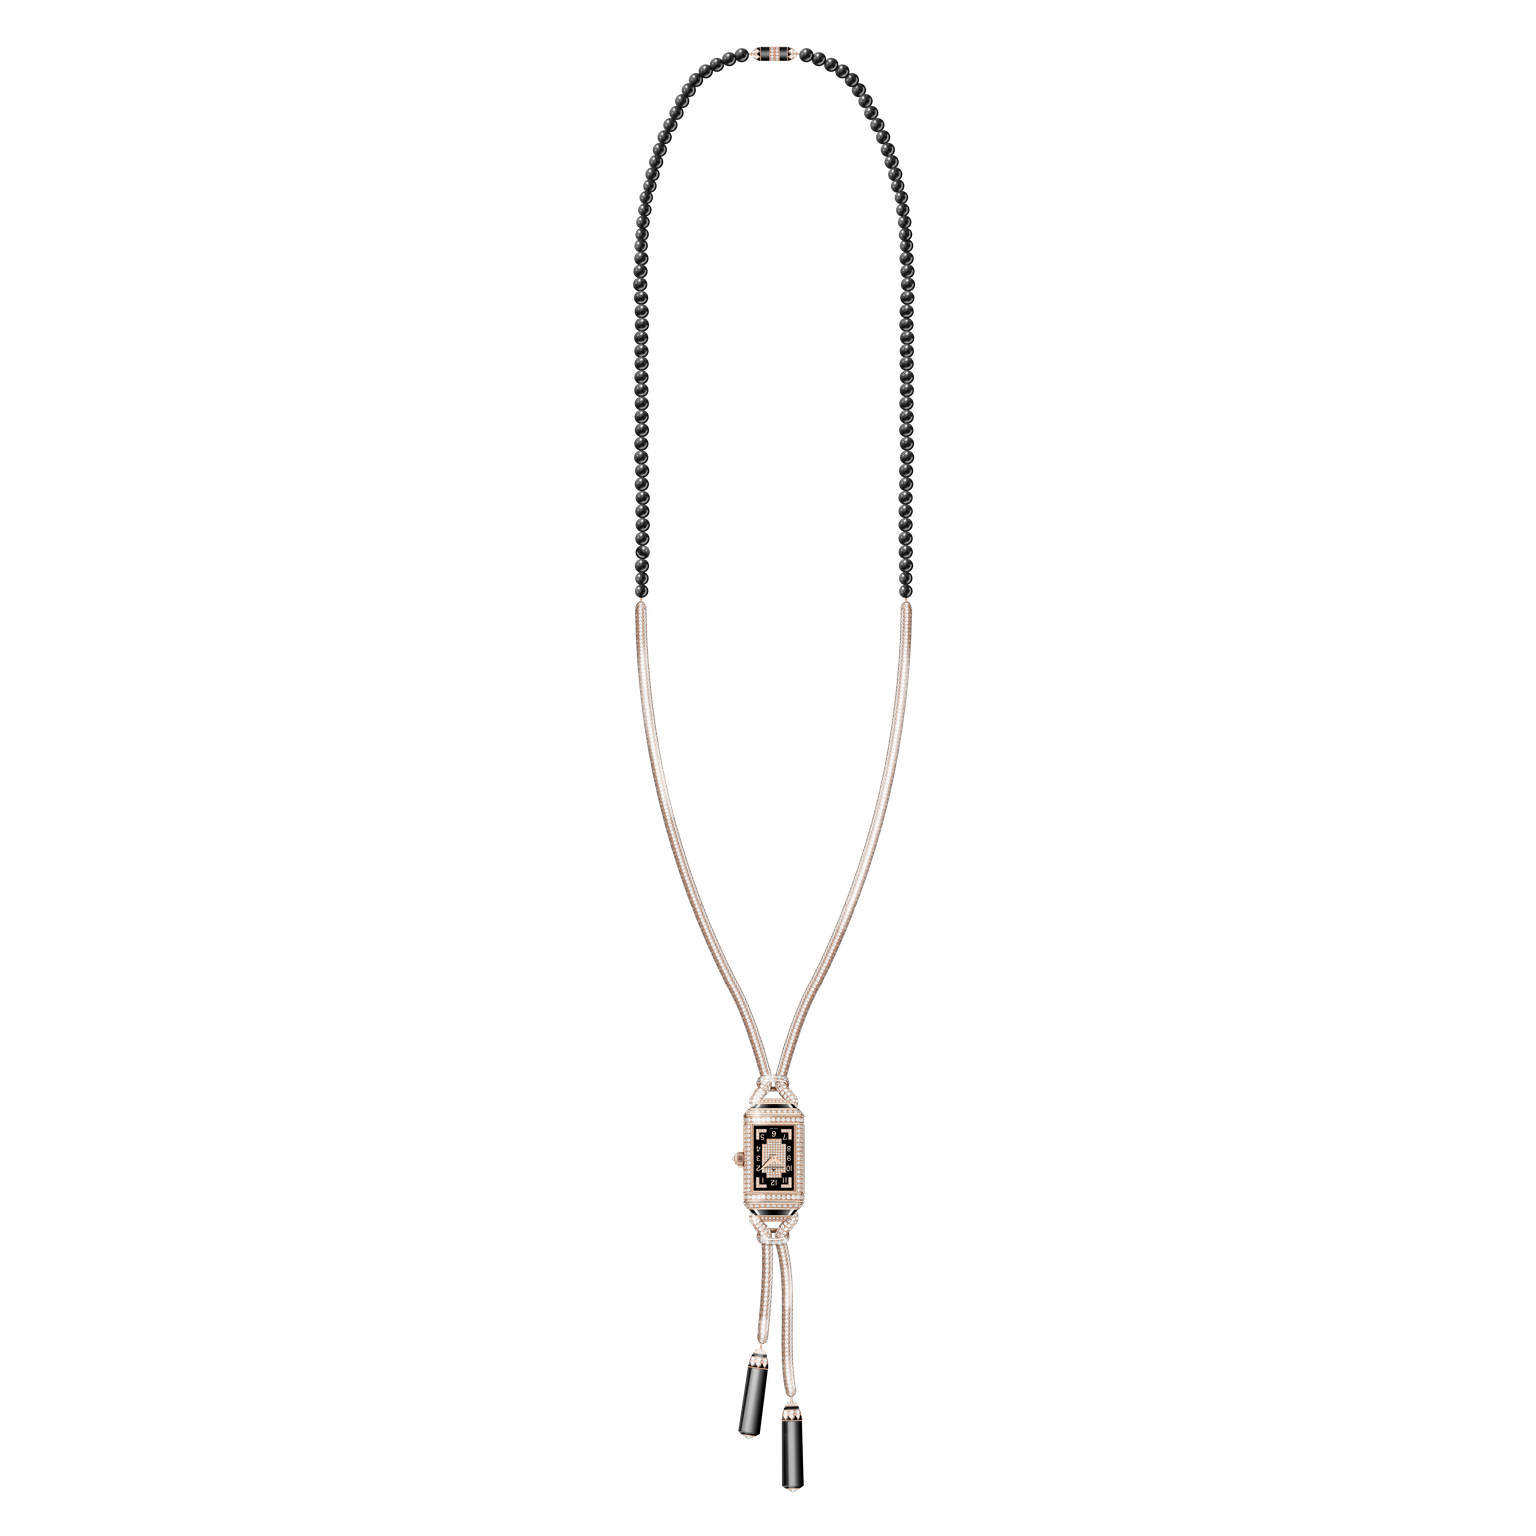 The Reverso Secret necklace by Jaeger-LeCoultre